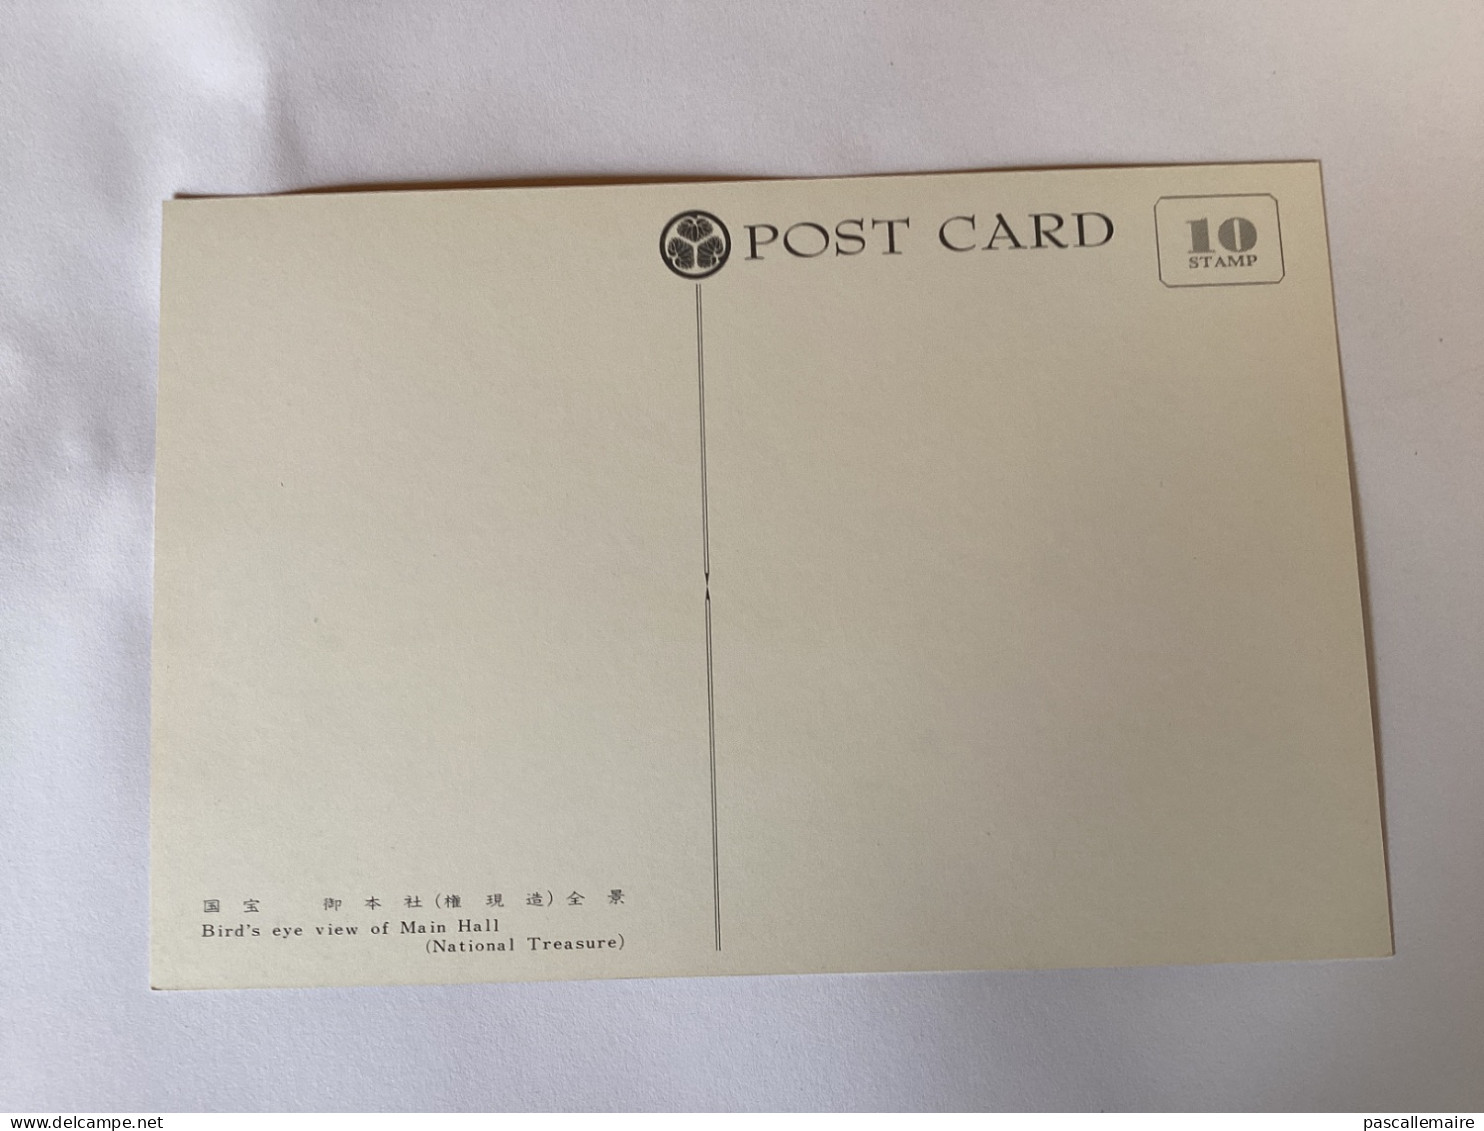 8 cartes postales Nikko Toshogu année 1960